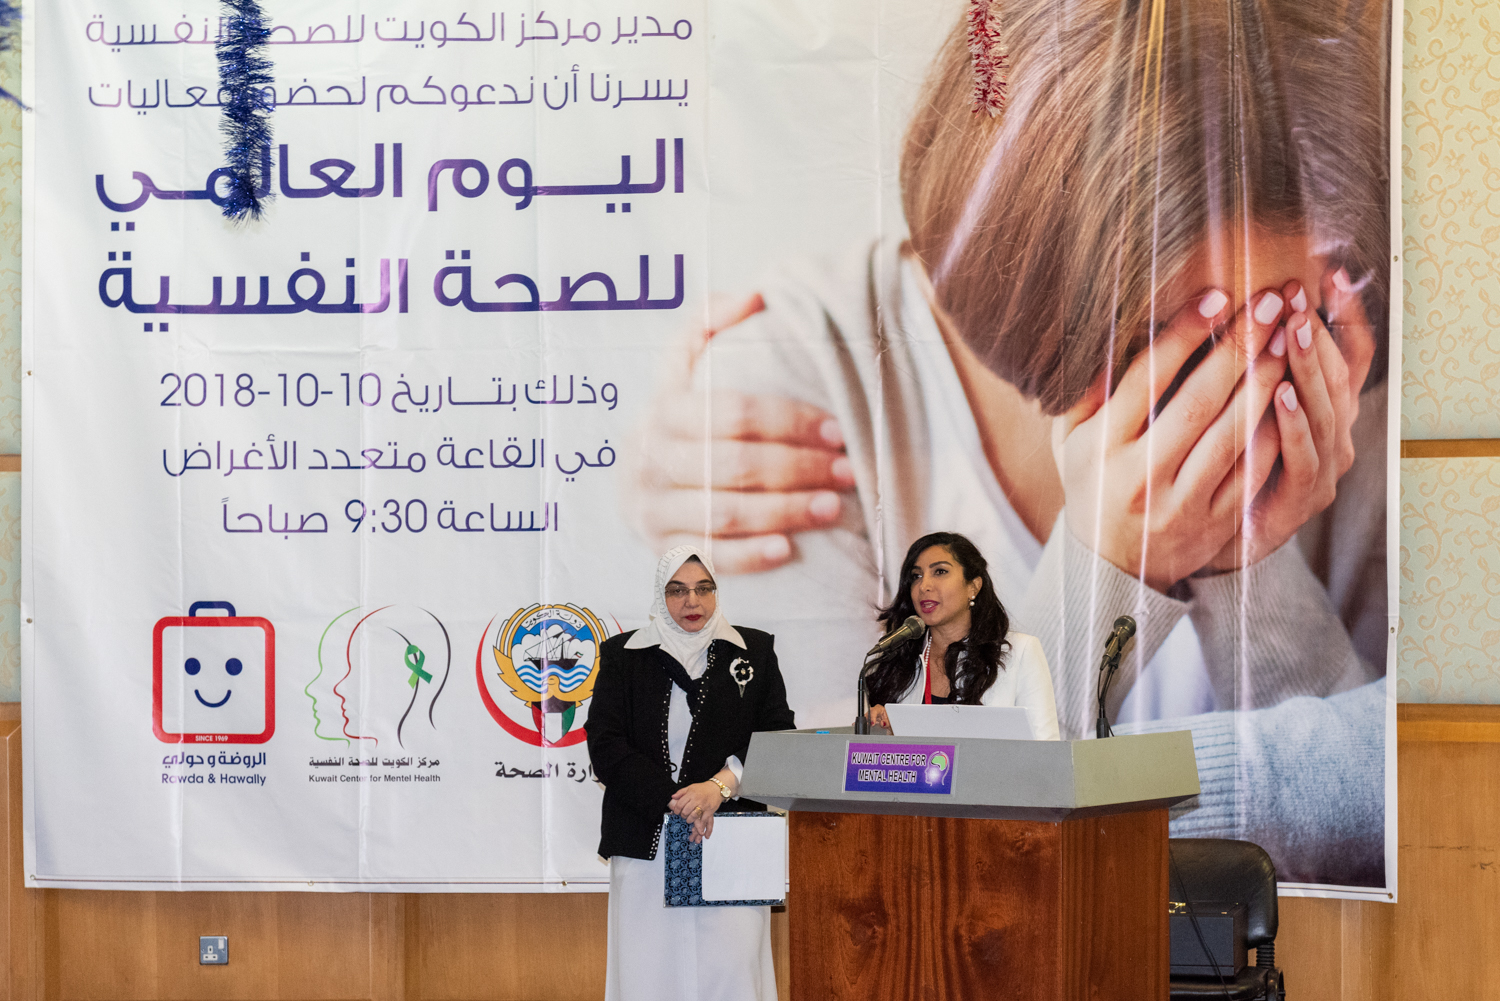 Head of Kuwait Center for Mental Health, Dr. Bibi Al-Ameeri